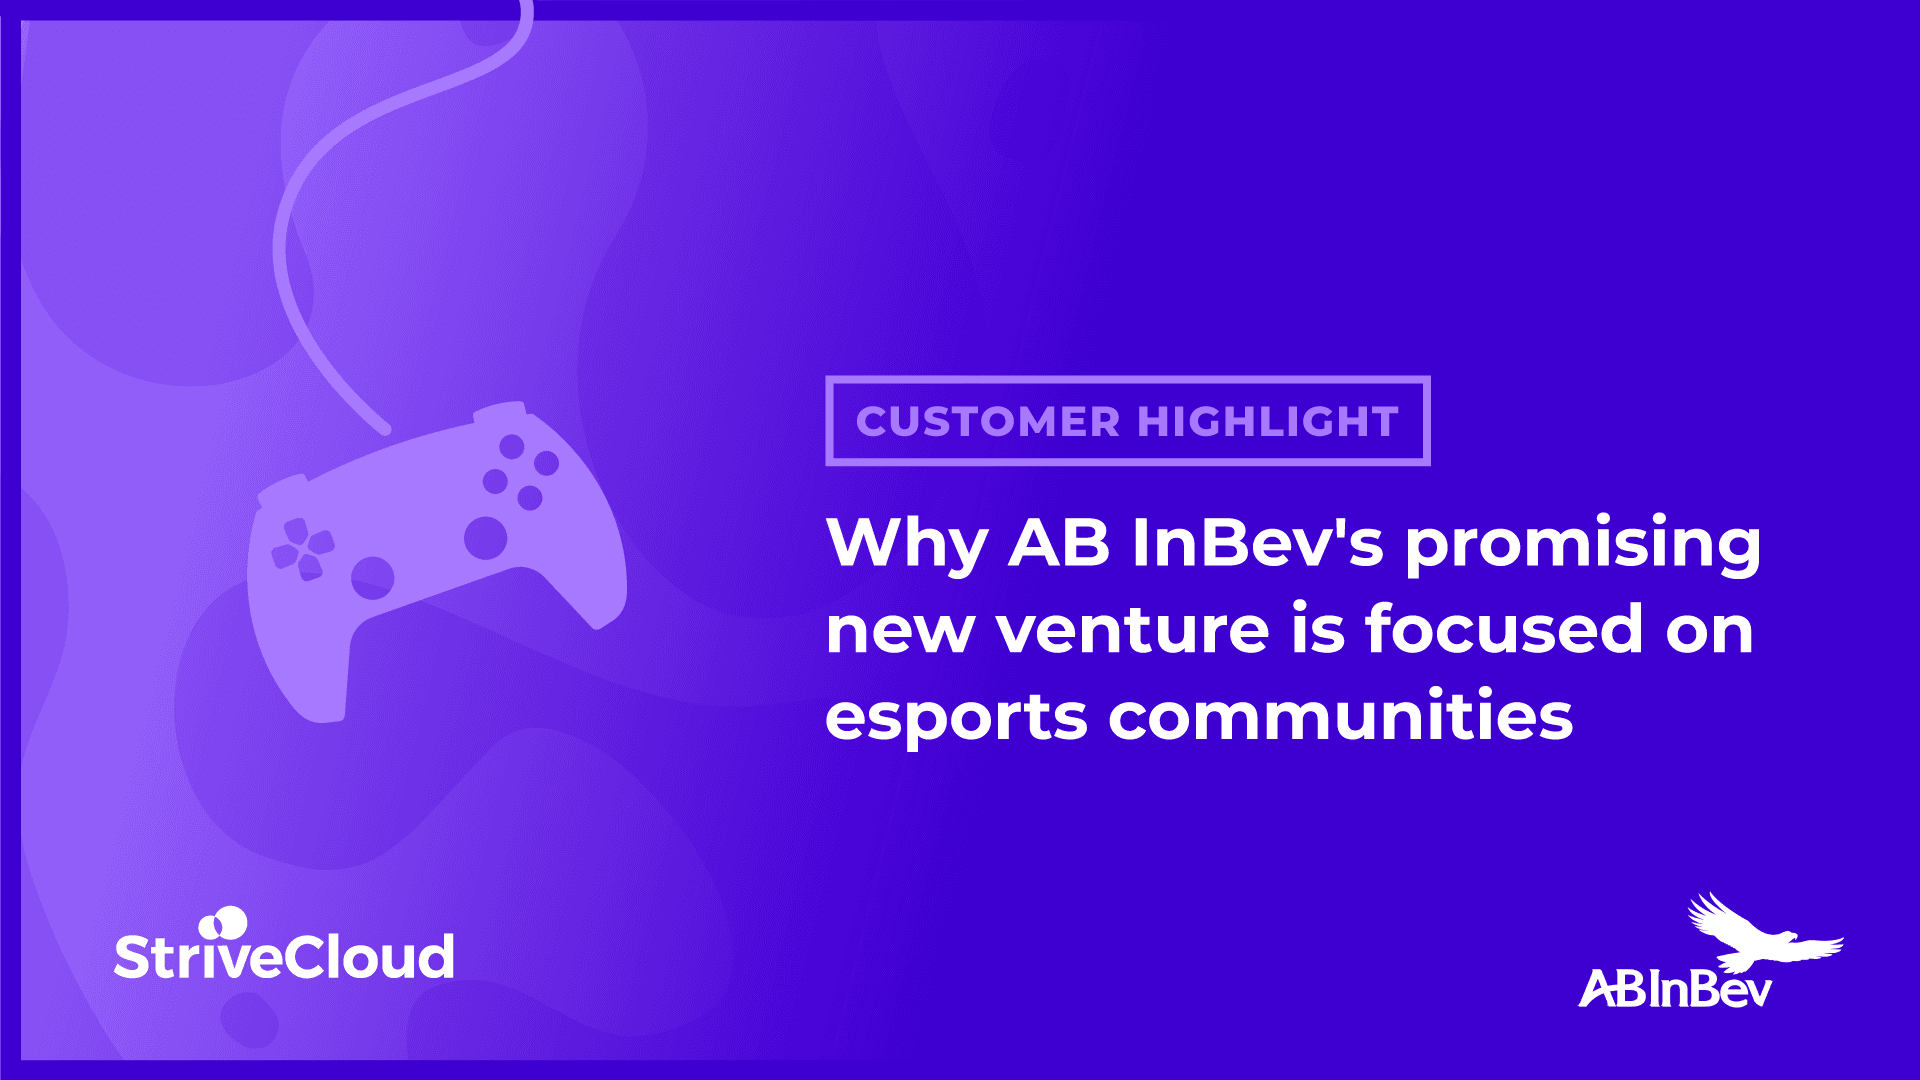 3 reasons why AB InBev's promising new venture is focused on esports communities